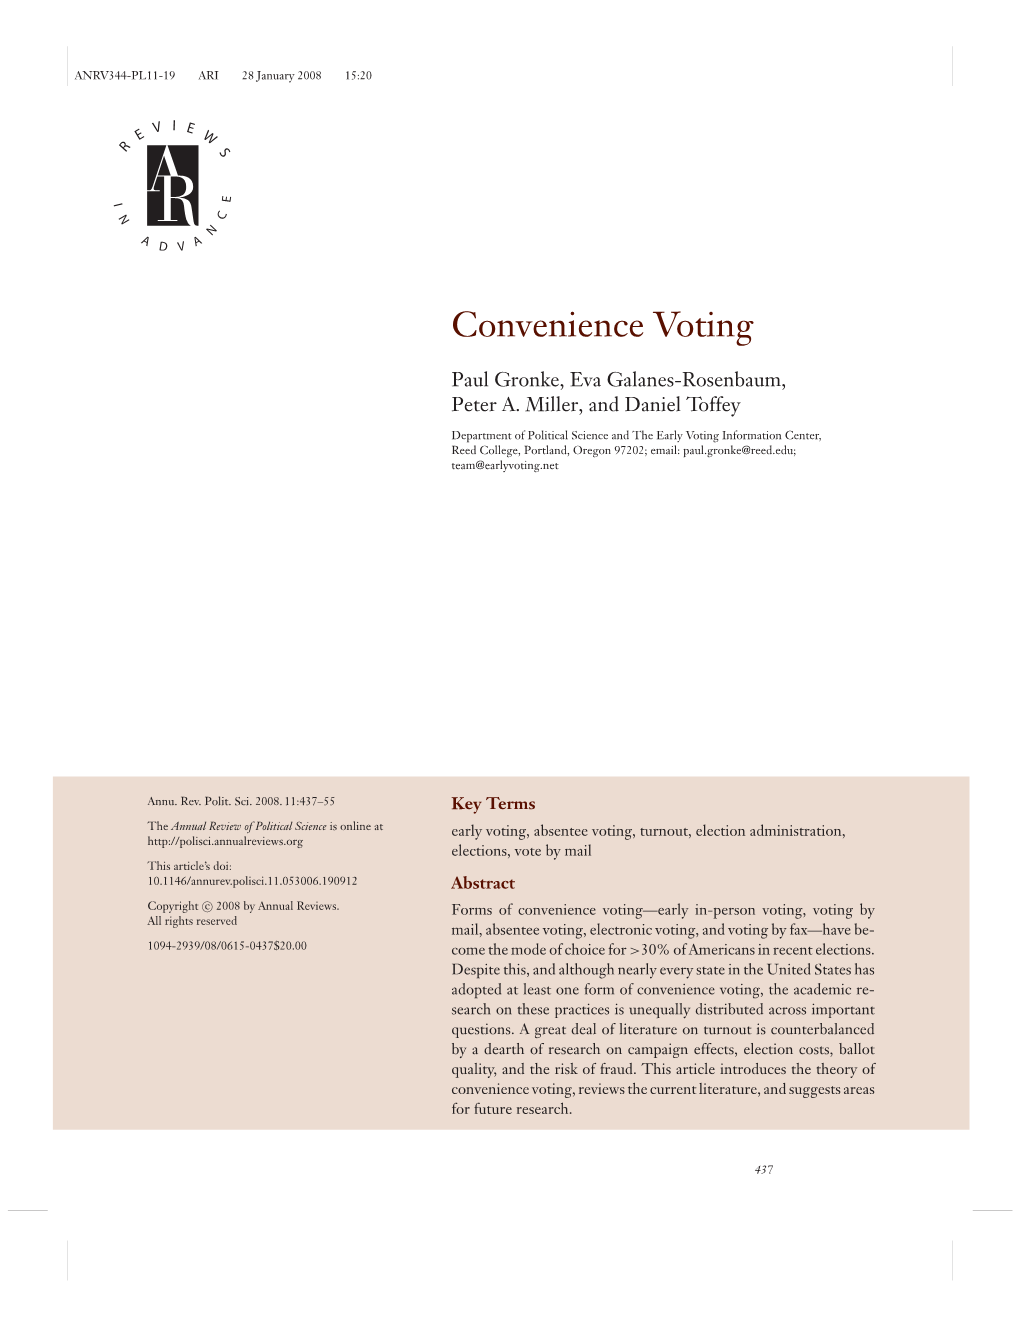 Convenience Voting